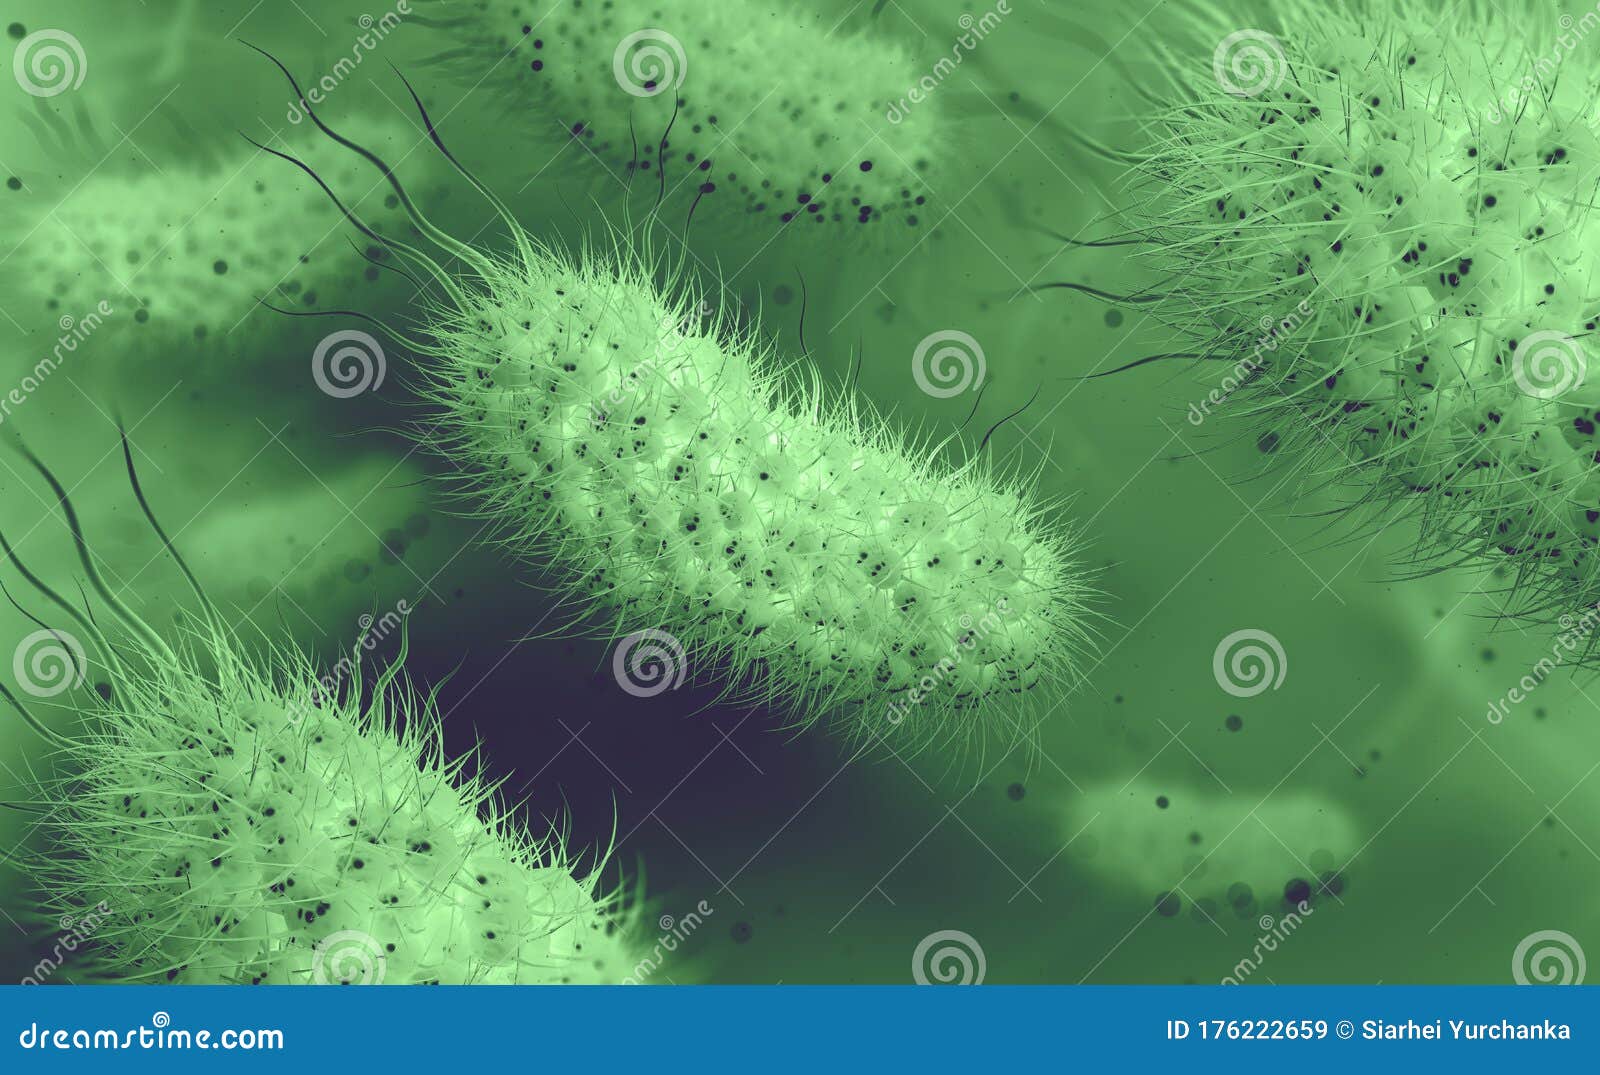 microorganisms in aquatic environment under microscope. probiotics. intestinal bacteria, gut flora